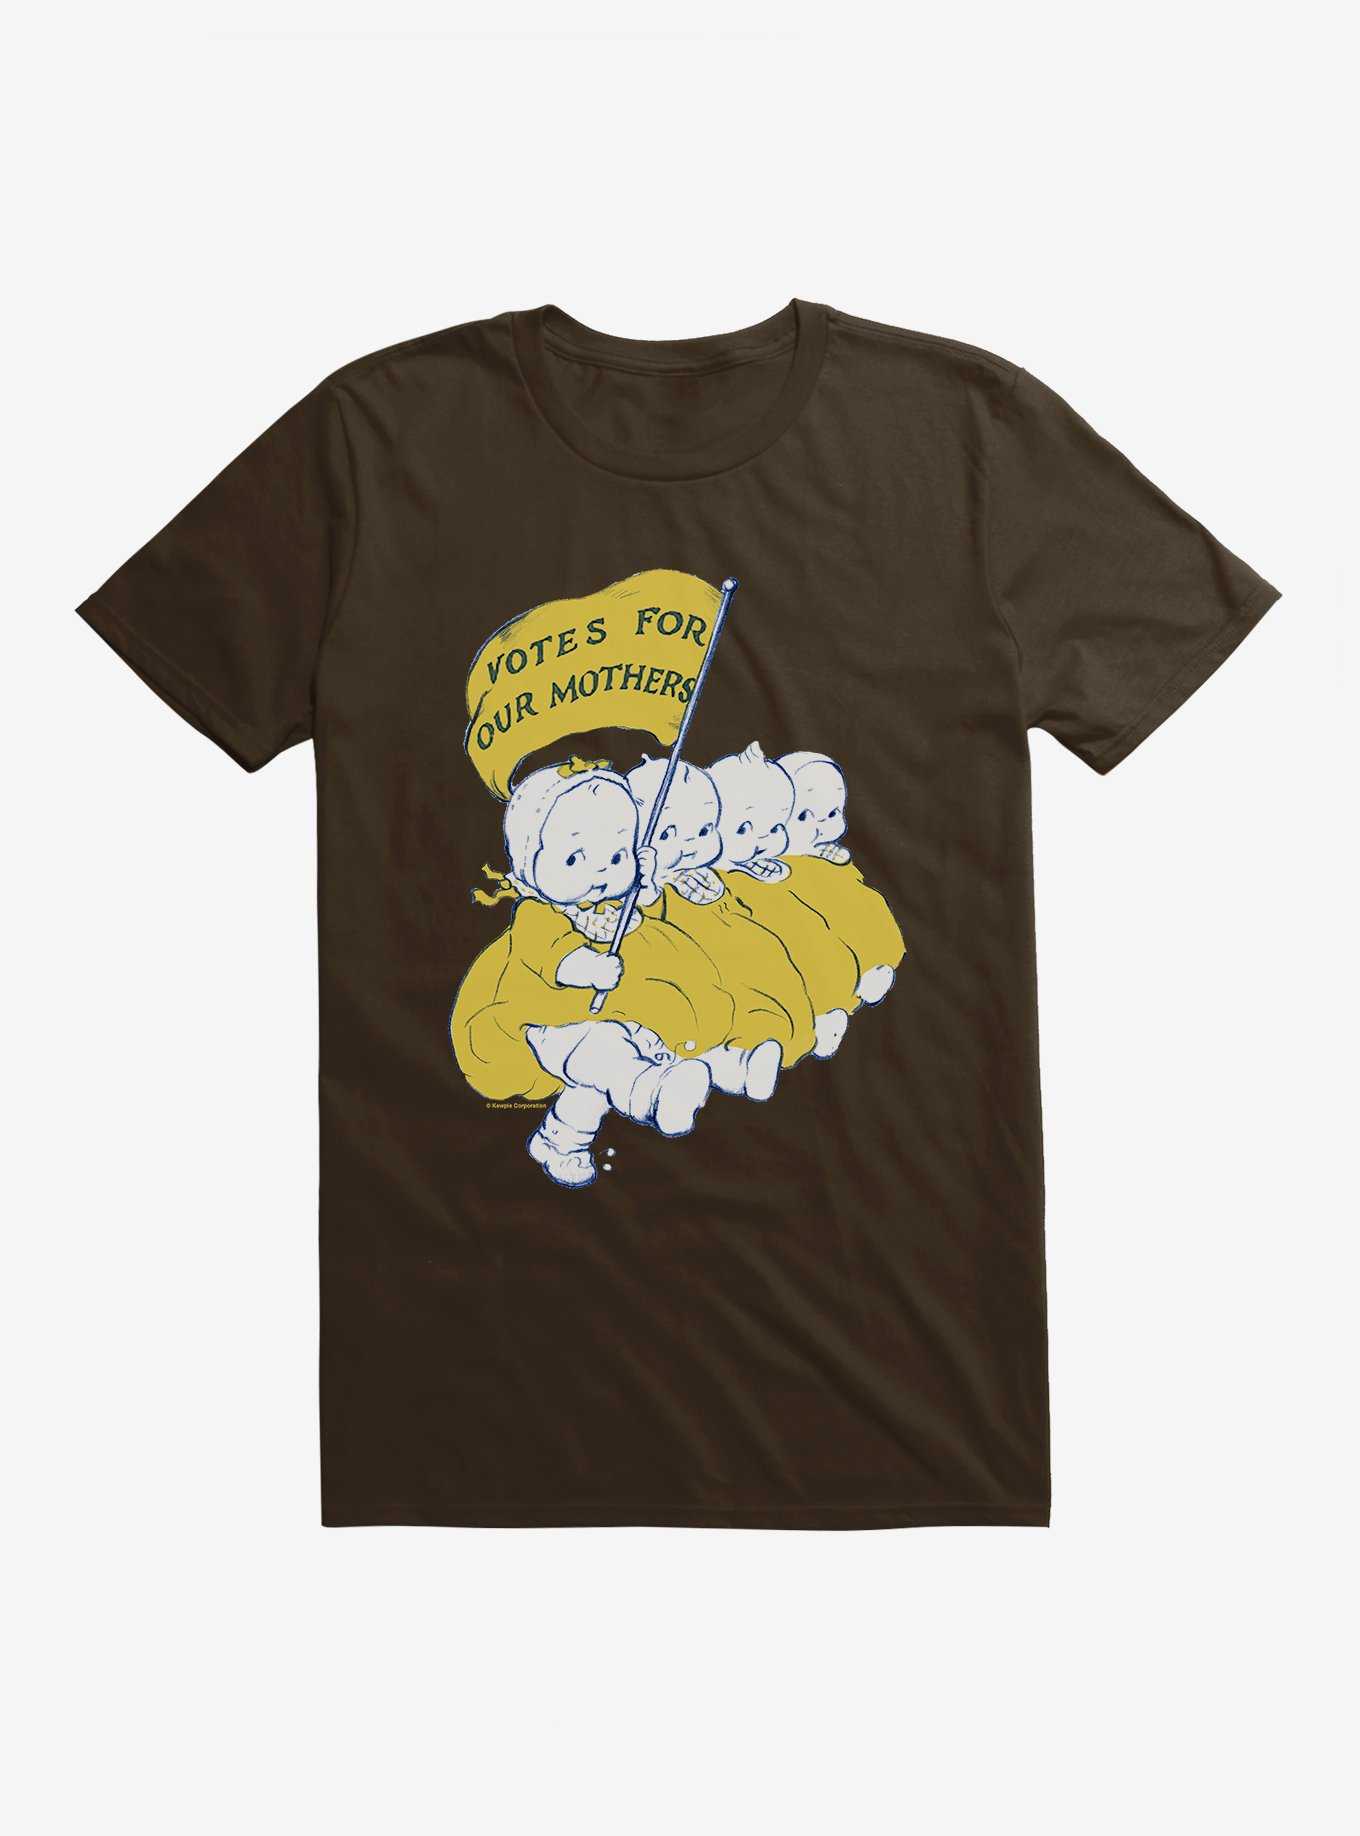 Kewpie Votes For Our Mother Banner T-Shirt, , hi-res